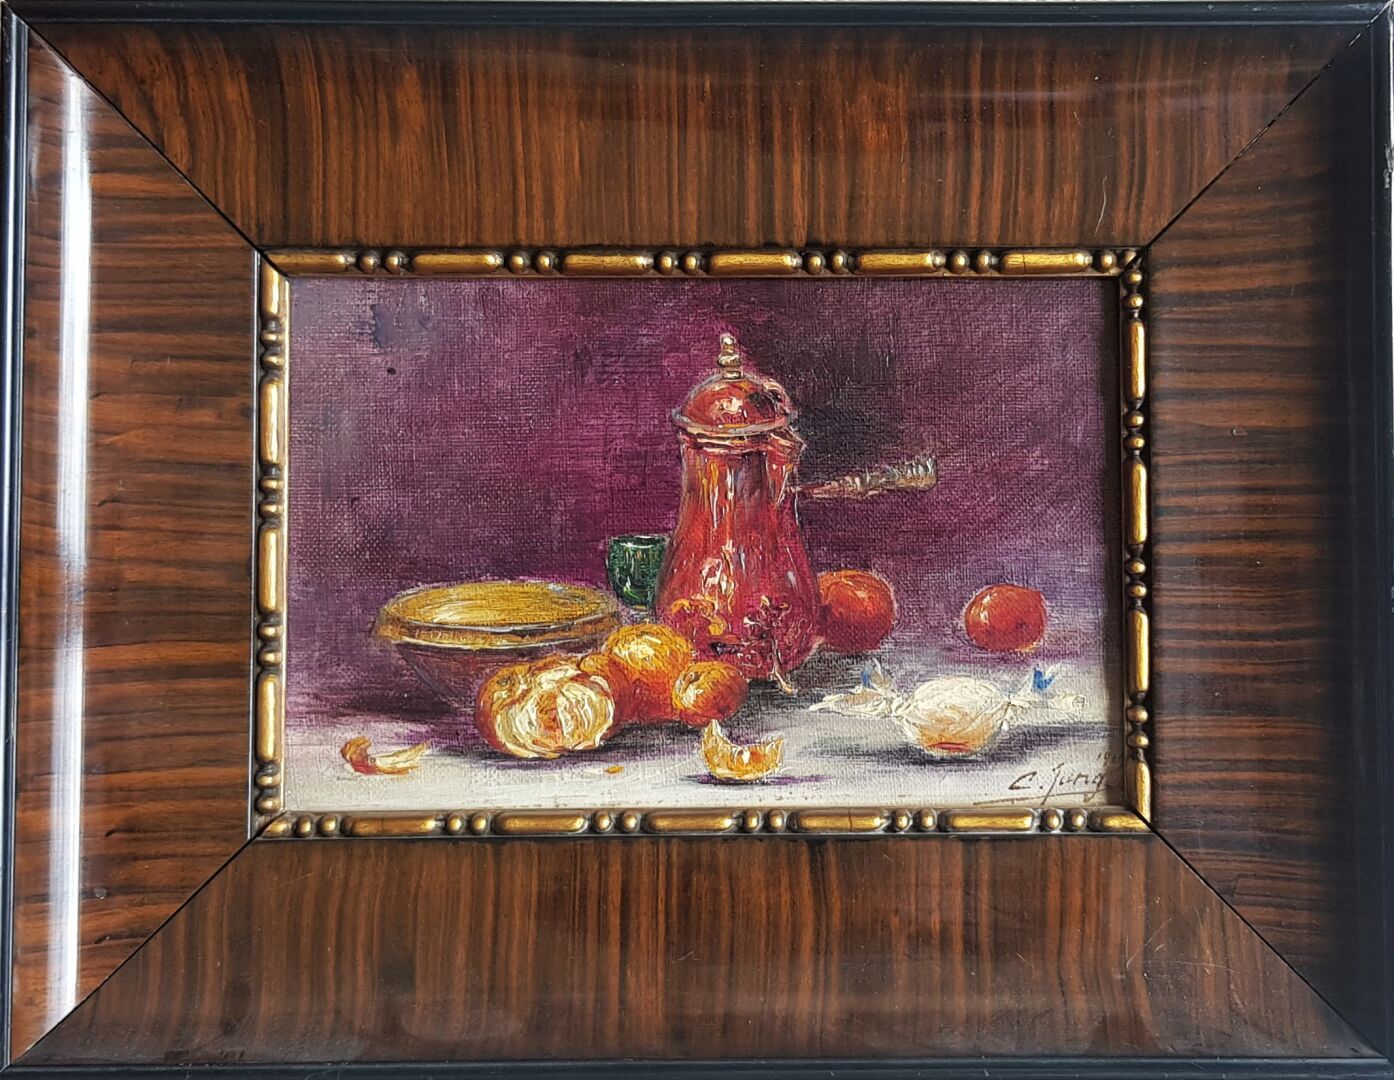 Null 查尔斯-弗雷德里克-容格 (1865-1936)

石榴盆的静物画

布面油画，左下角有签名

16 x 24 厘米



巧克力罐和水果的静物画

&hellip;